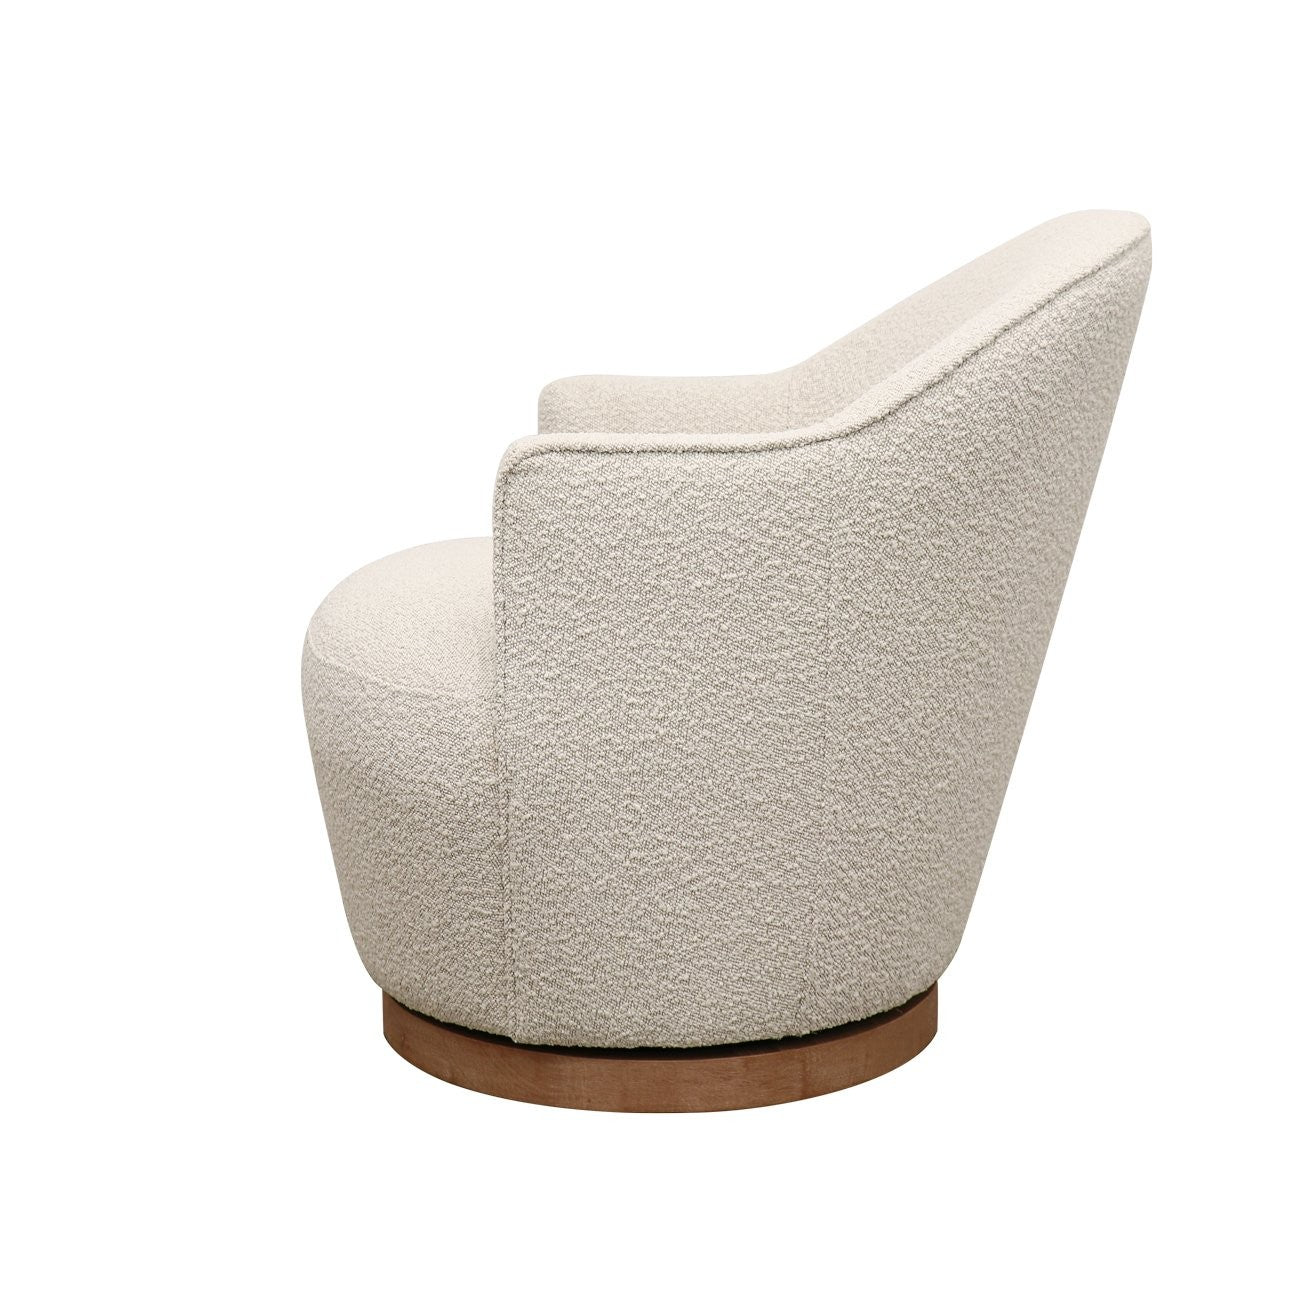 Fabian Swivel Chair - Cream Boucle